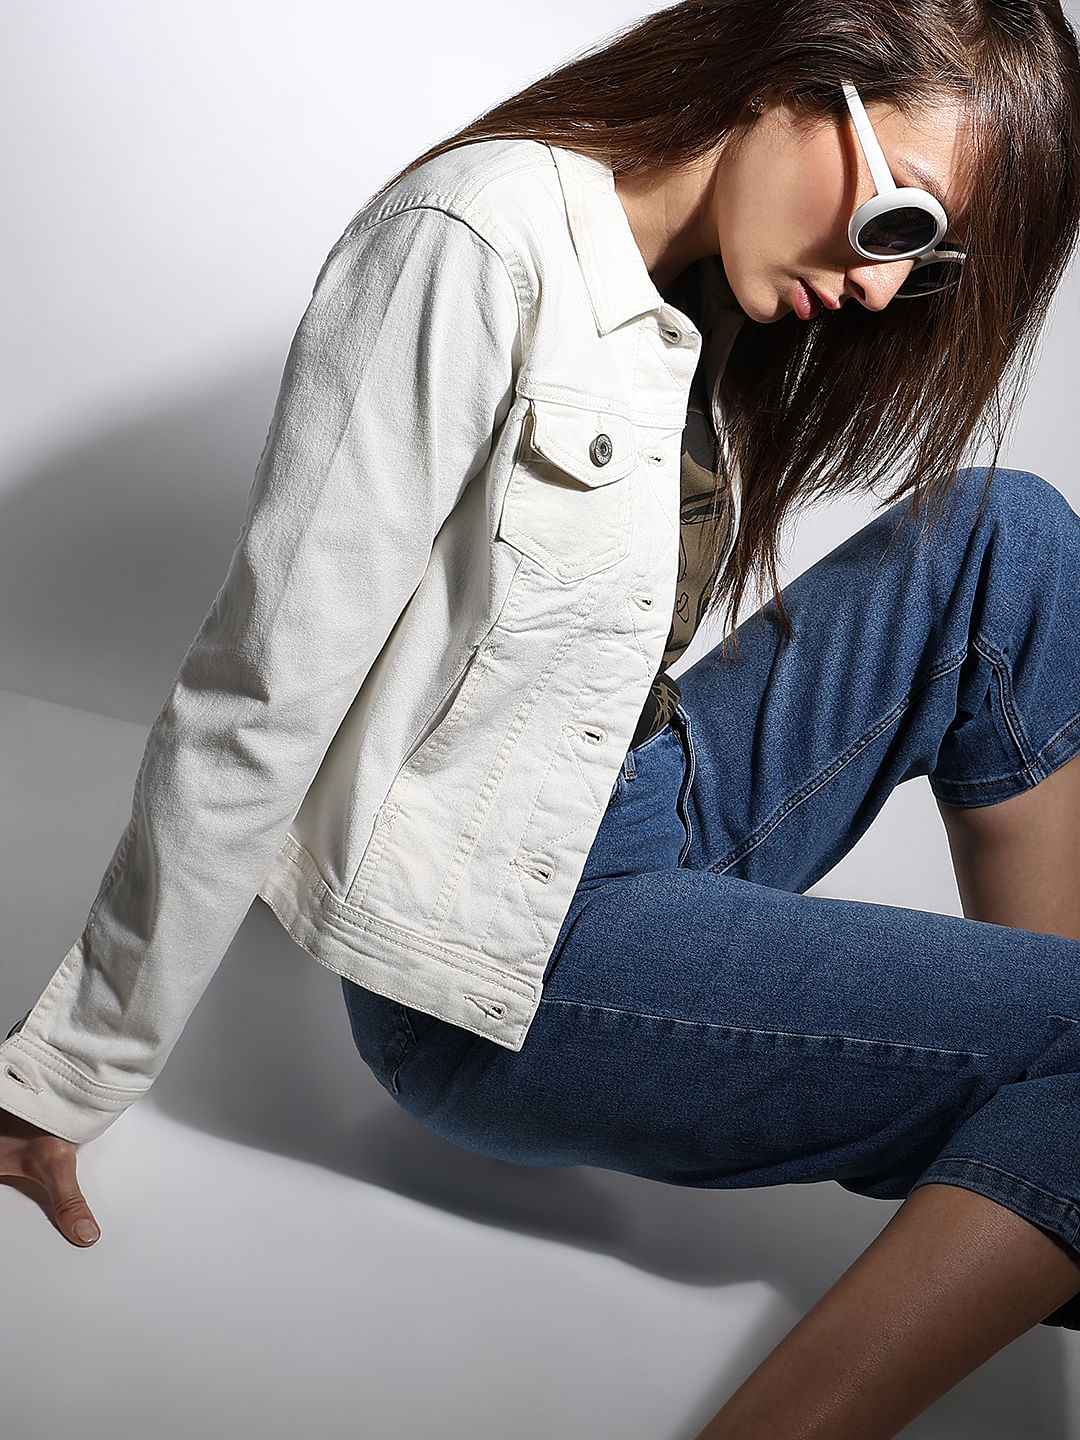 Off-White Taipei - pf19 womens Off-White™ denim jacket, crop tank top and  knit mini skirt. #offwhite #offwhitetaipei | Facebook